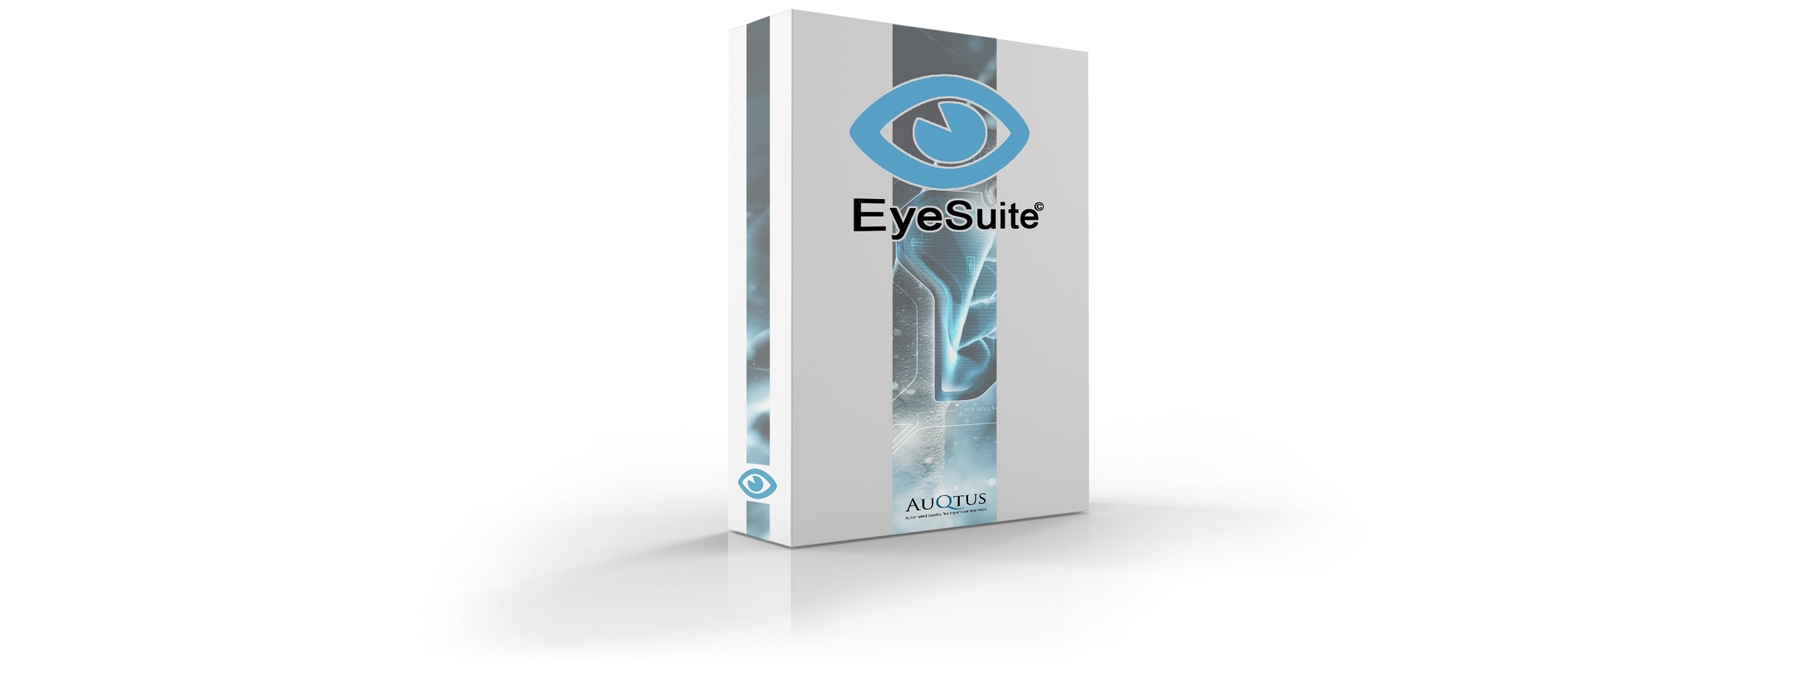 eye suite software